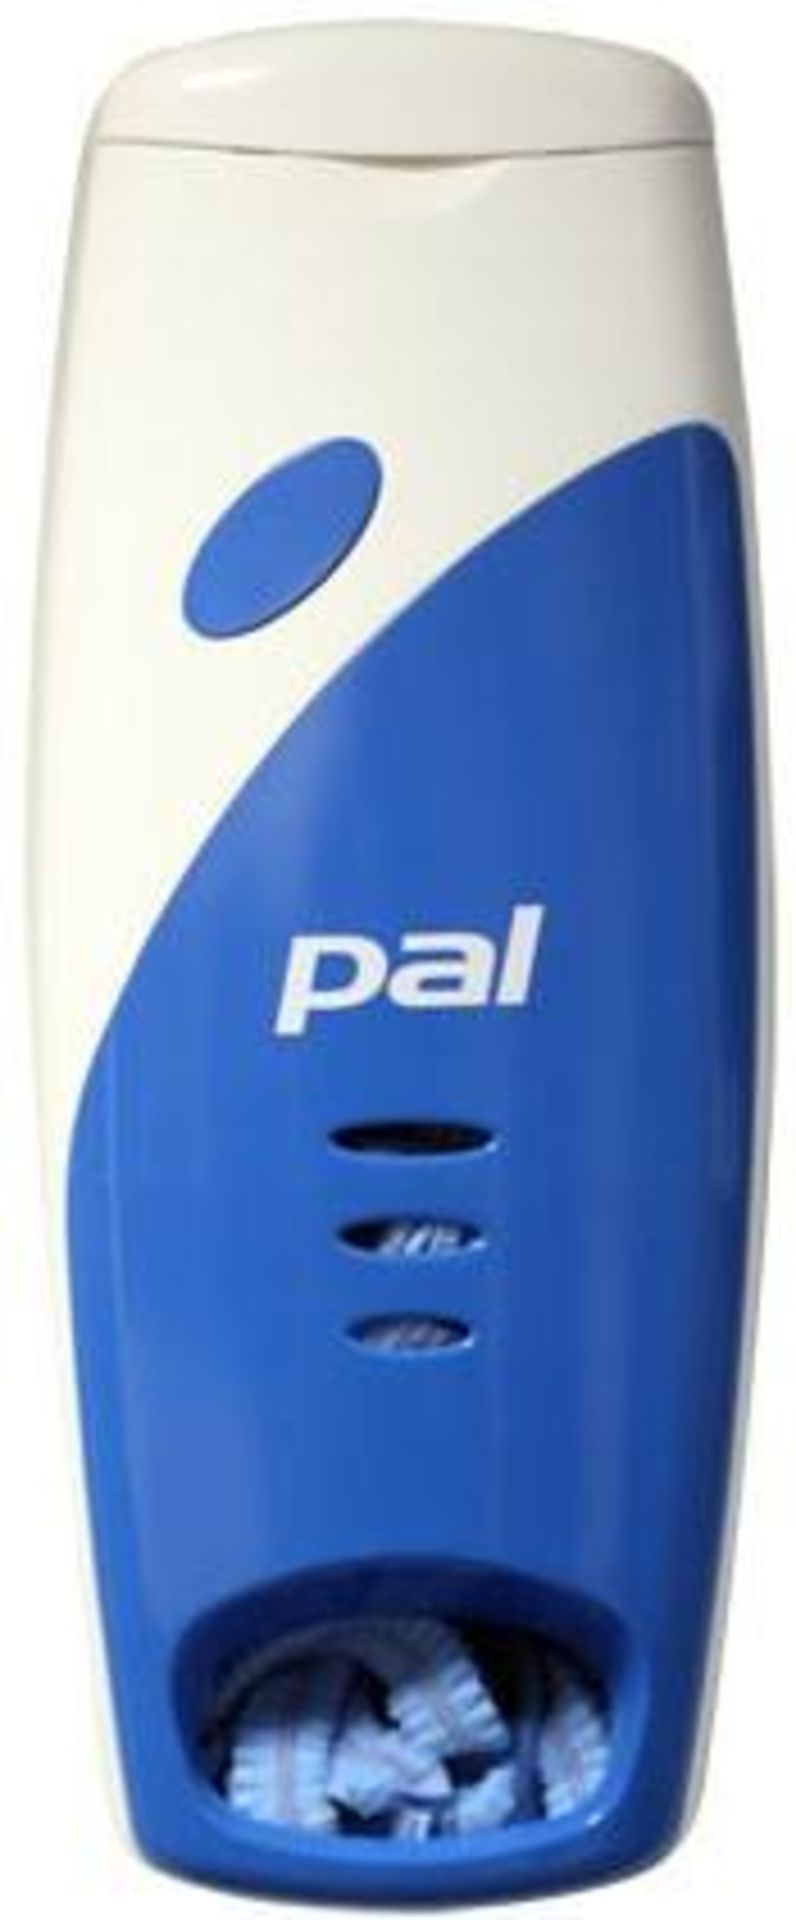 3 x Pal Dispenser For Ecopak - CL185 - Ref: PA/X64110/P21 - New Stock - Location: Stoke-on-Trent ST3